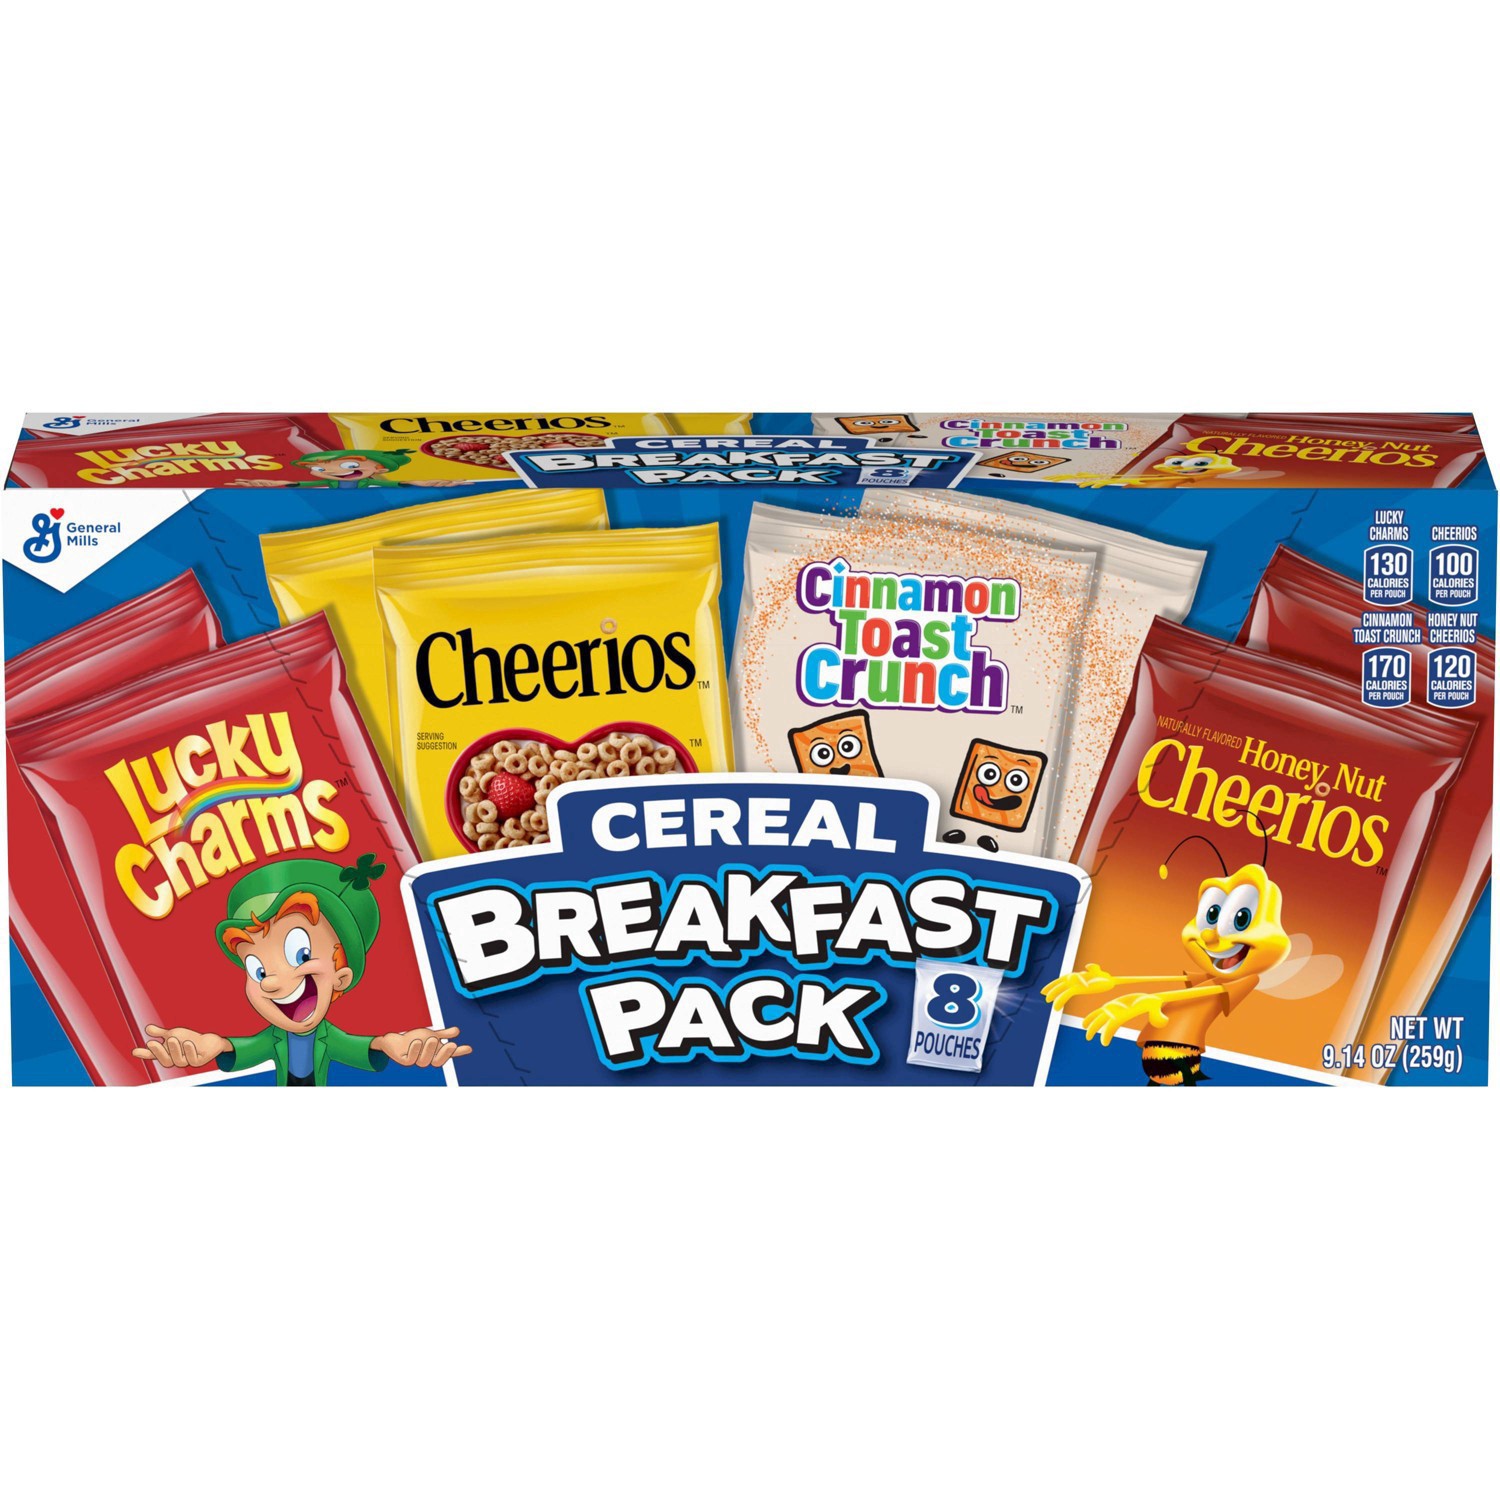 slide 46 of 141, General Mills Breakfast Pack Cereal, 8 ct